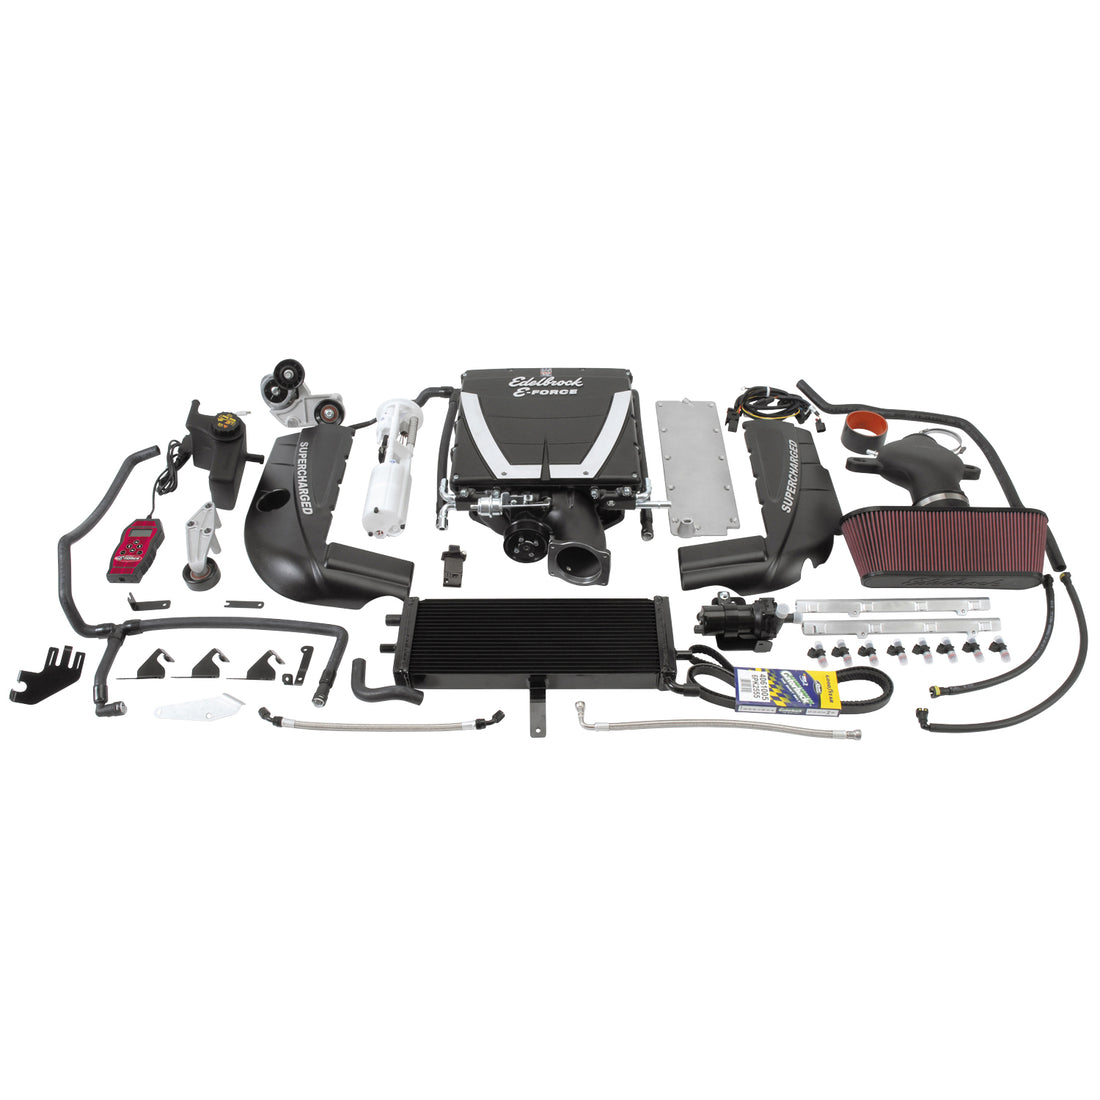 Edelbrock Stage 2 Supercharger Kit #1594 For 2005-07 Corvette LS2 W/ Tune Edelbrock